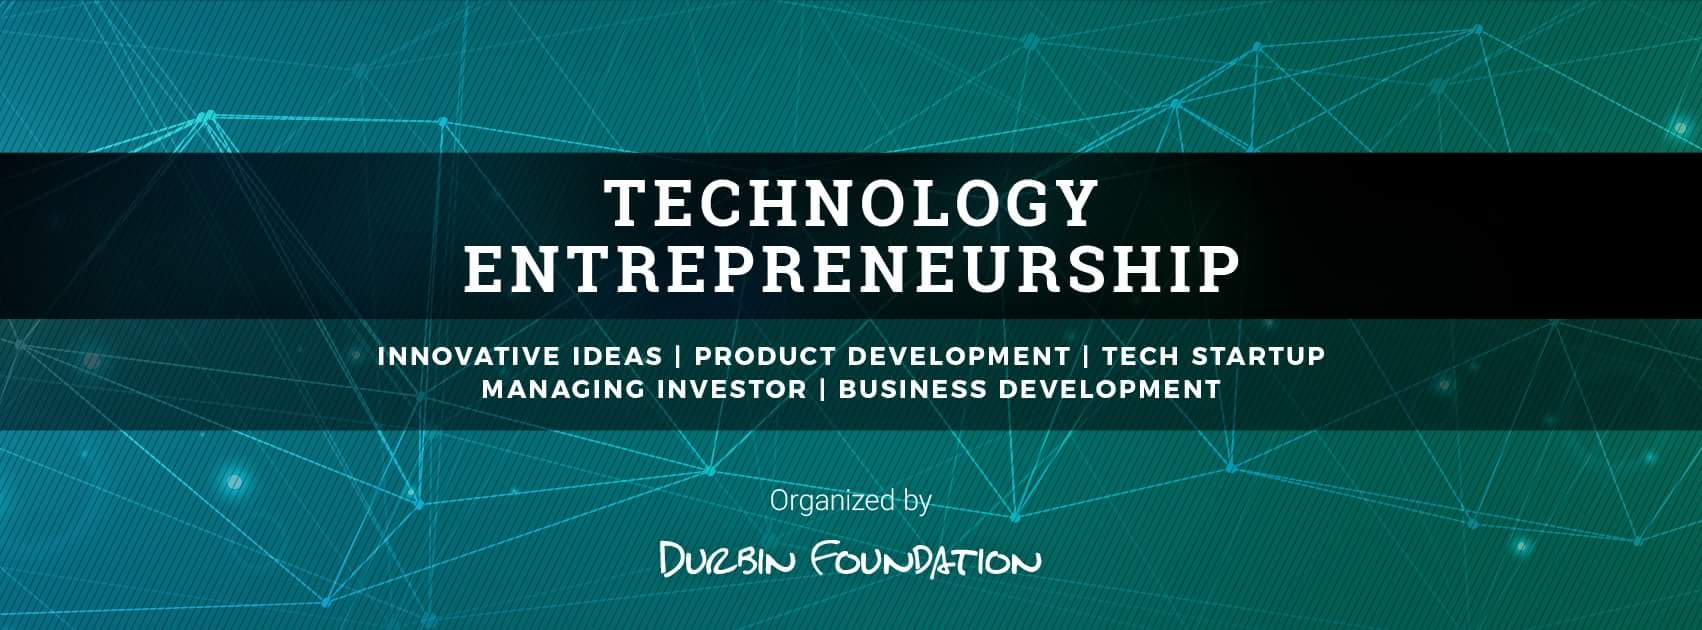 Technology Entrepreneurship 2017 in Dhaka - Bangladesh